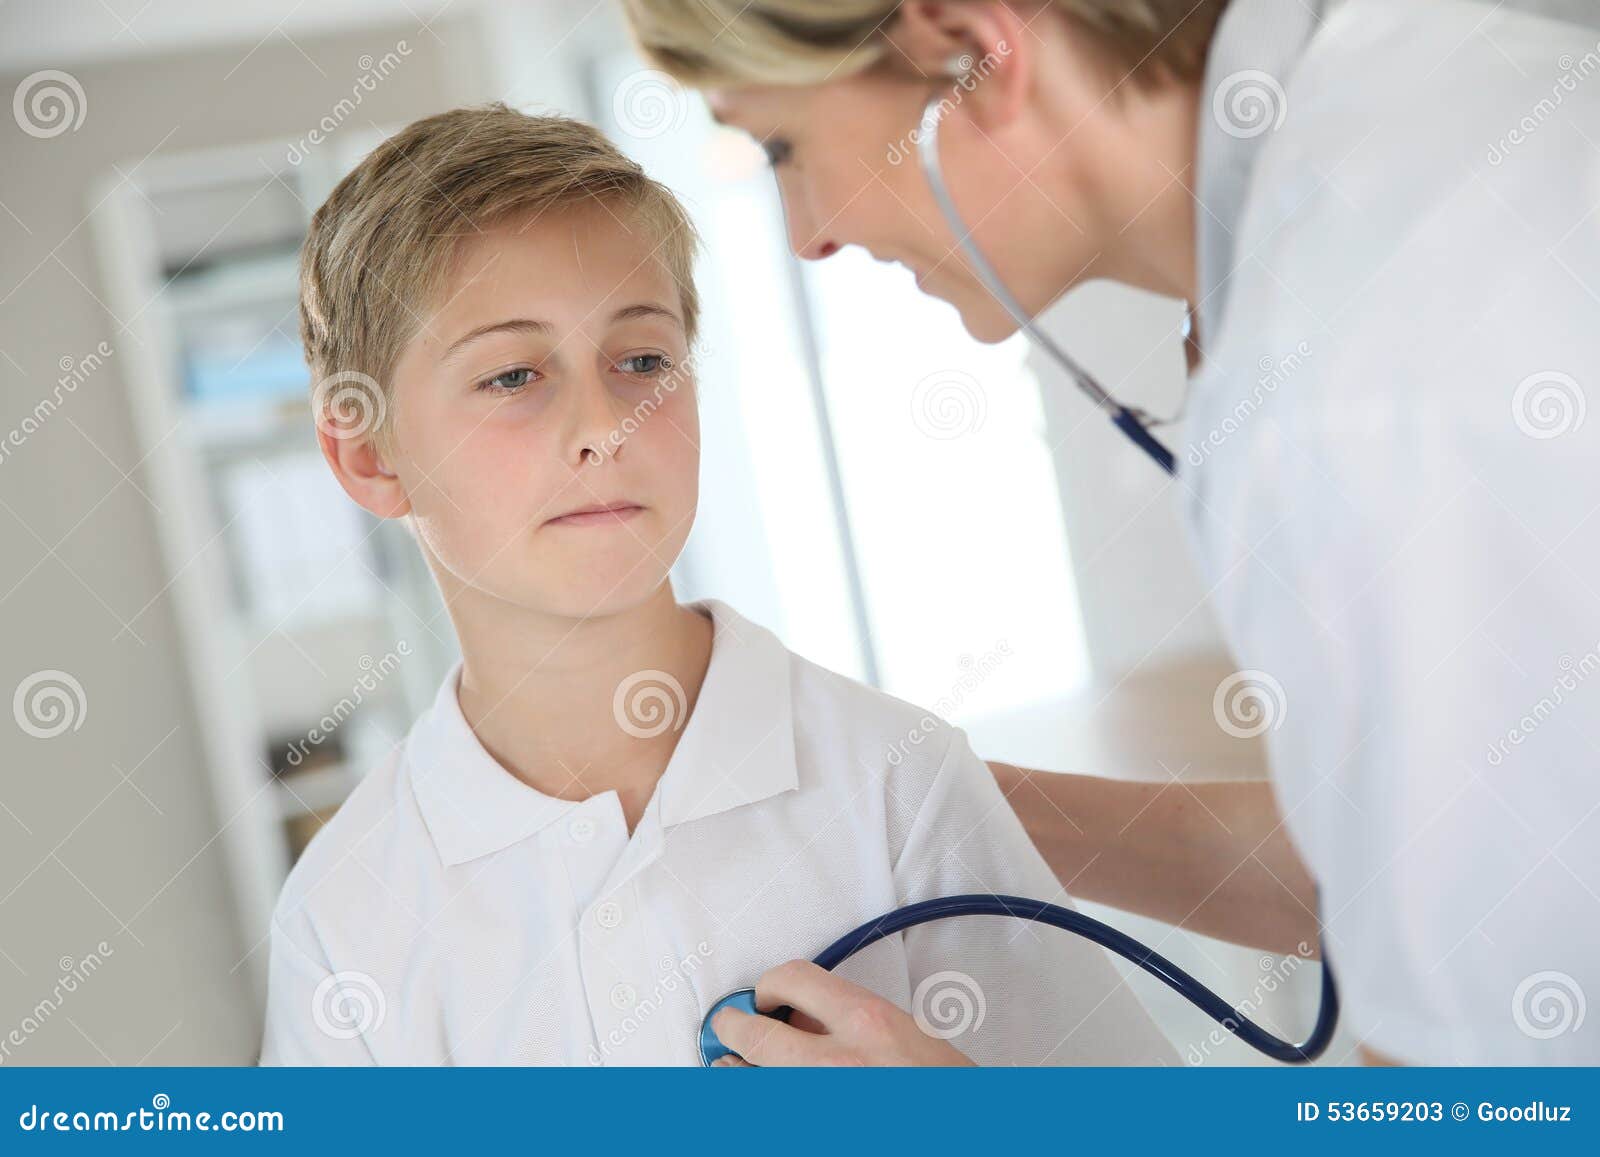 Гол осматривает врач. Врач осматривает мальчика. Мальчик и стетоскоп. Врачихи осматривают мальчика. Мальчик со стетоскопом фото.